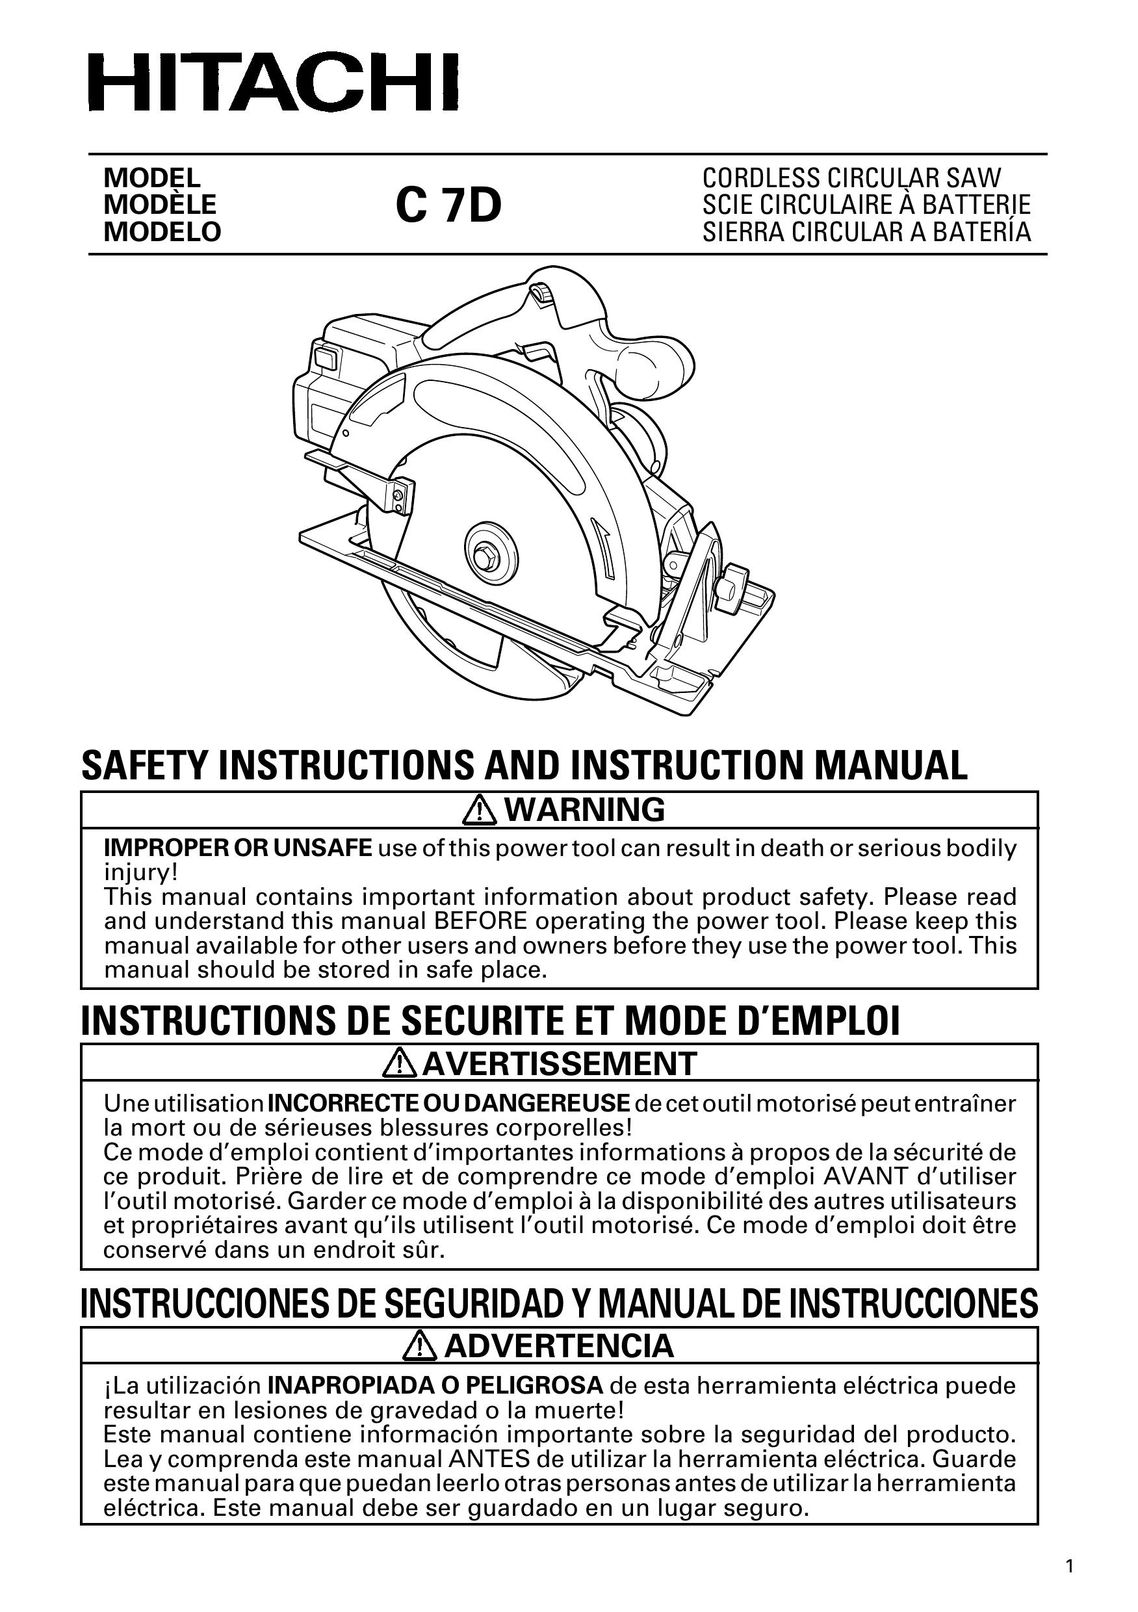 Hitachi C 7D Cordless Saw User Manual